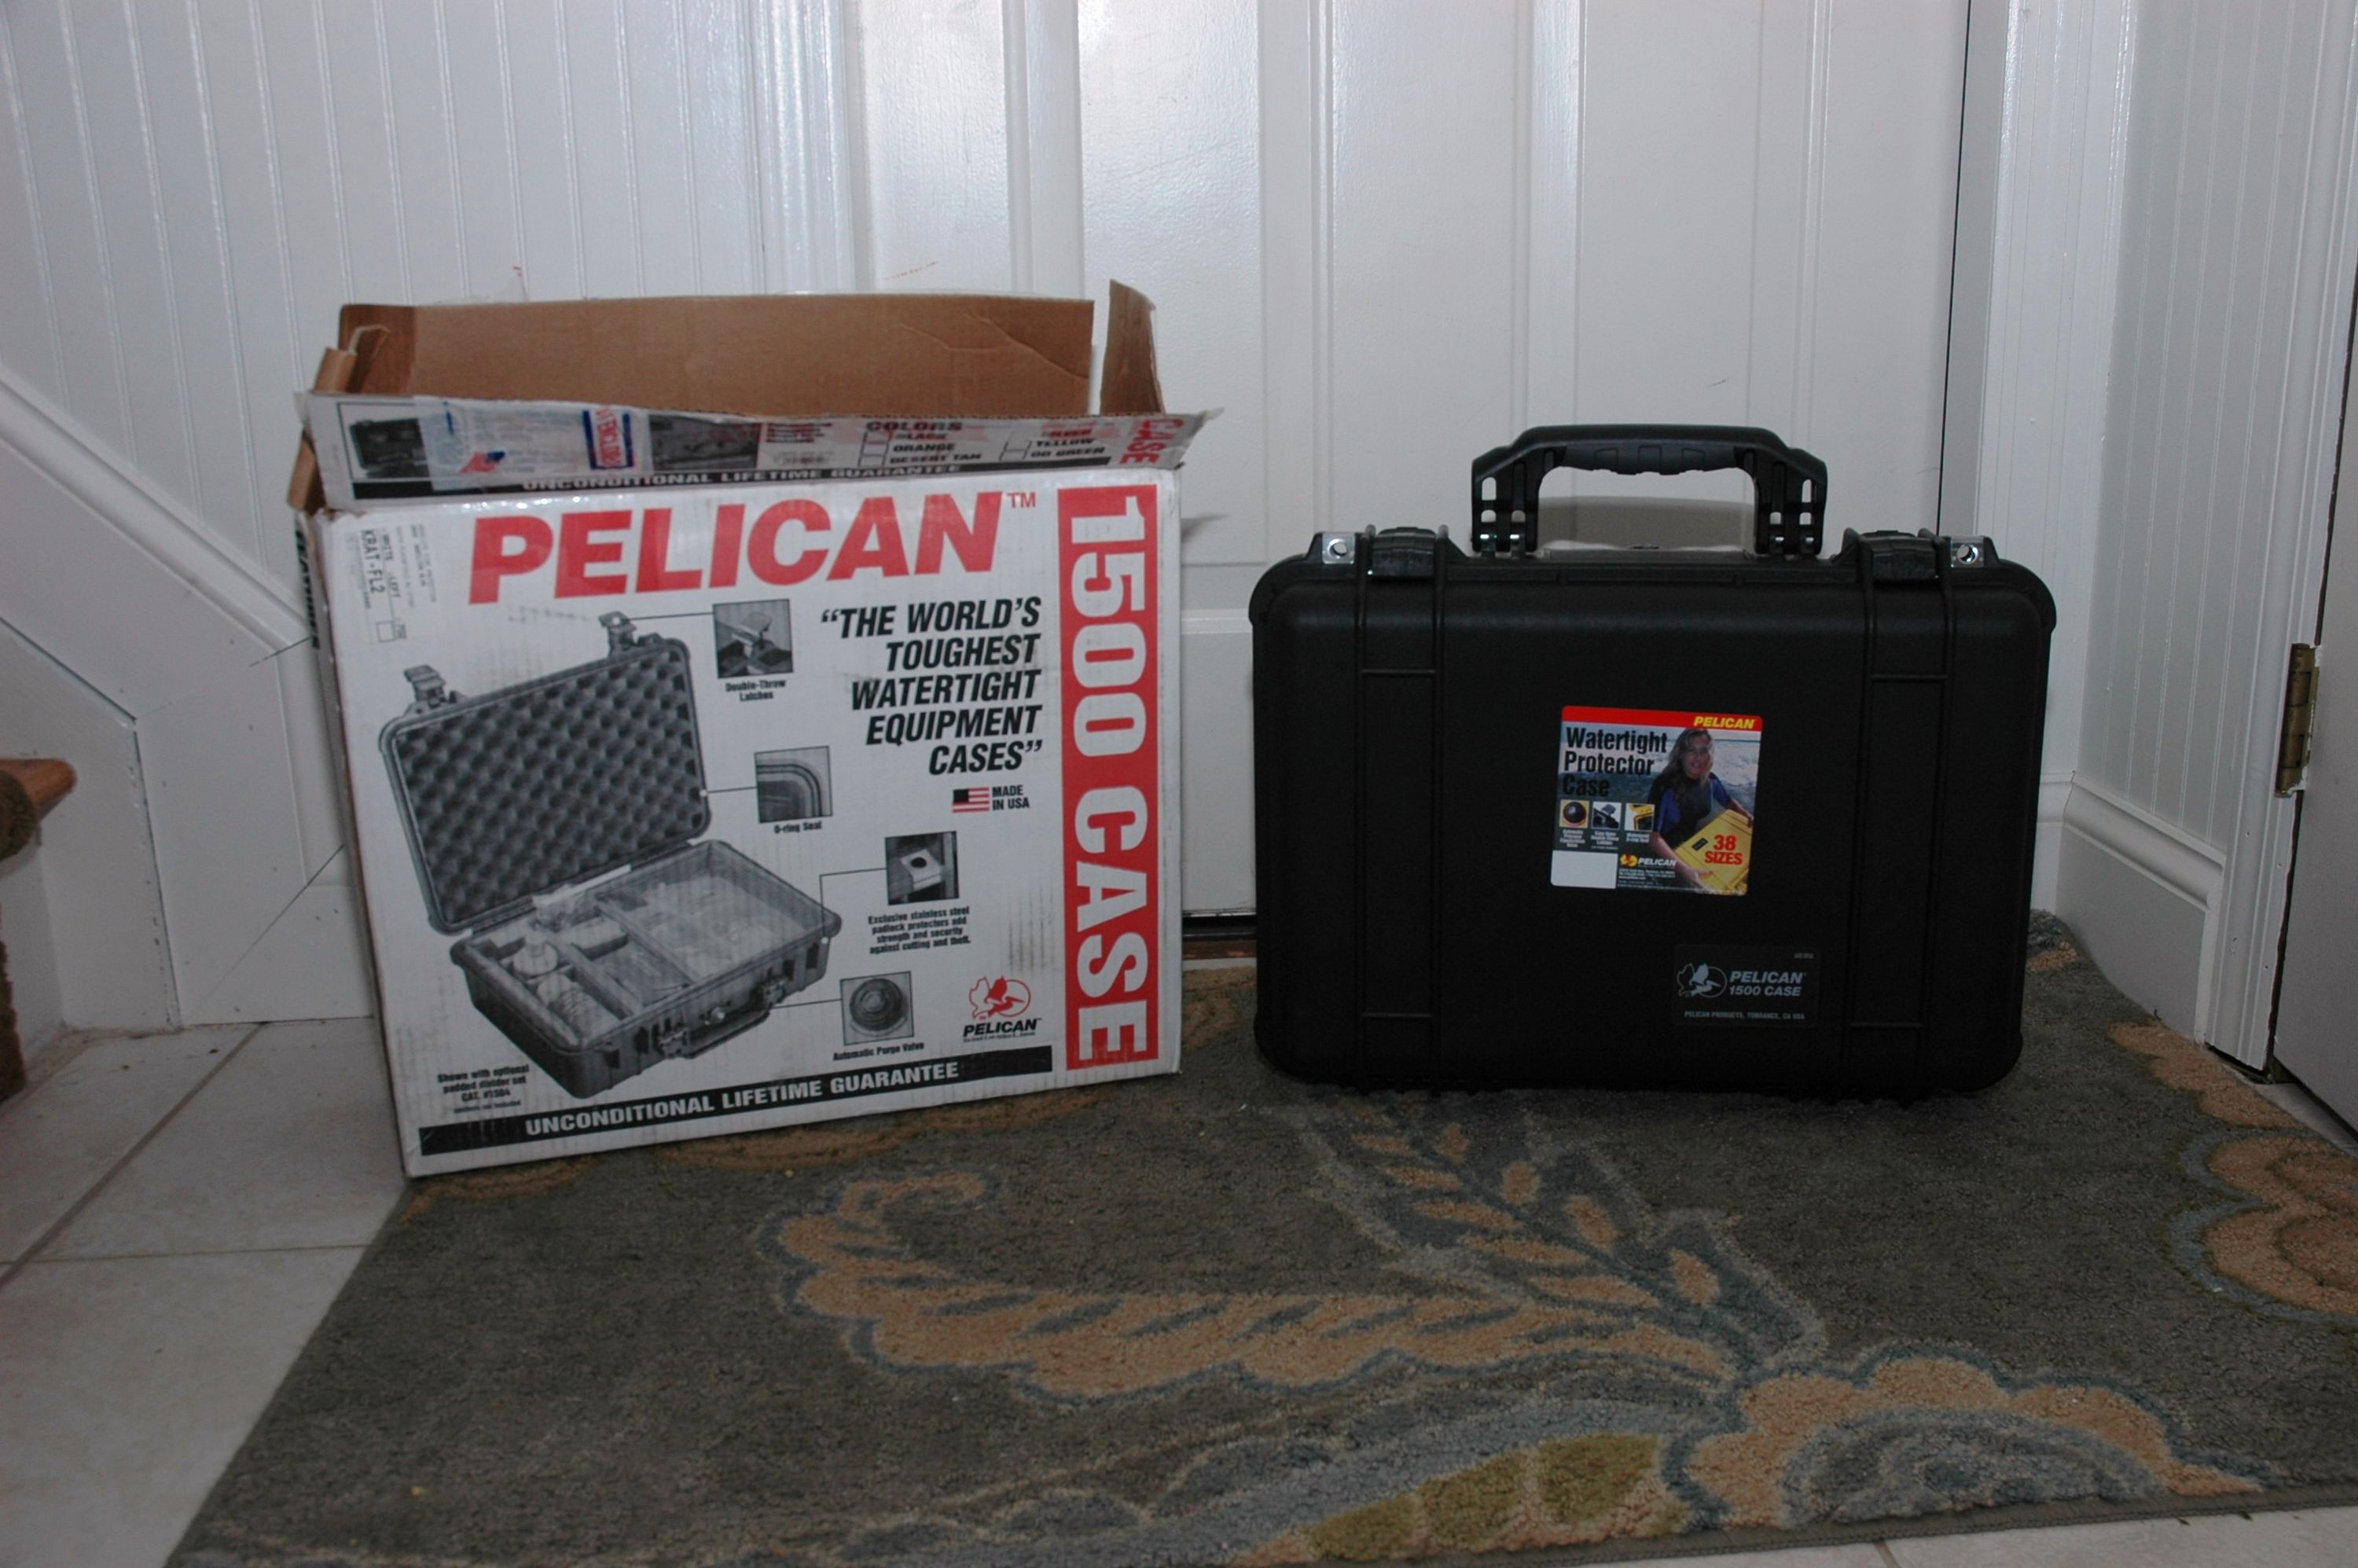 Pelican 1500 Case